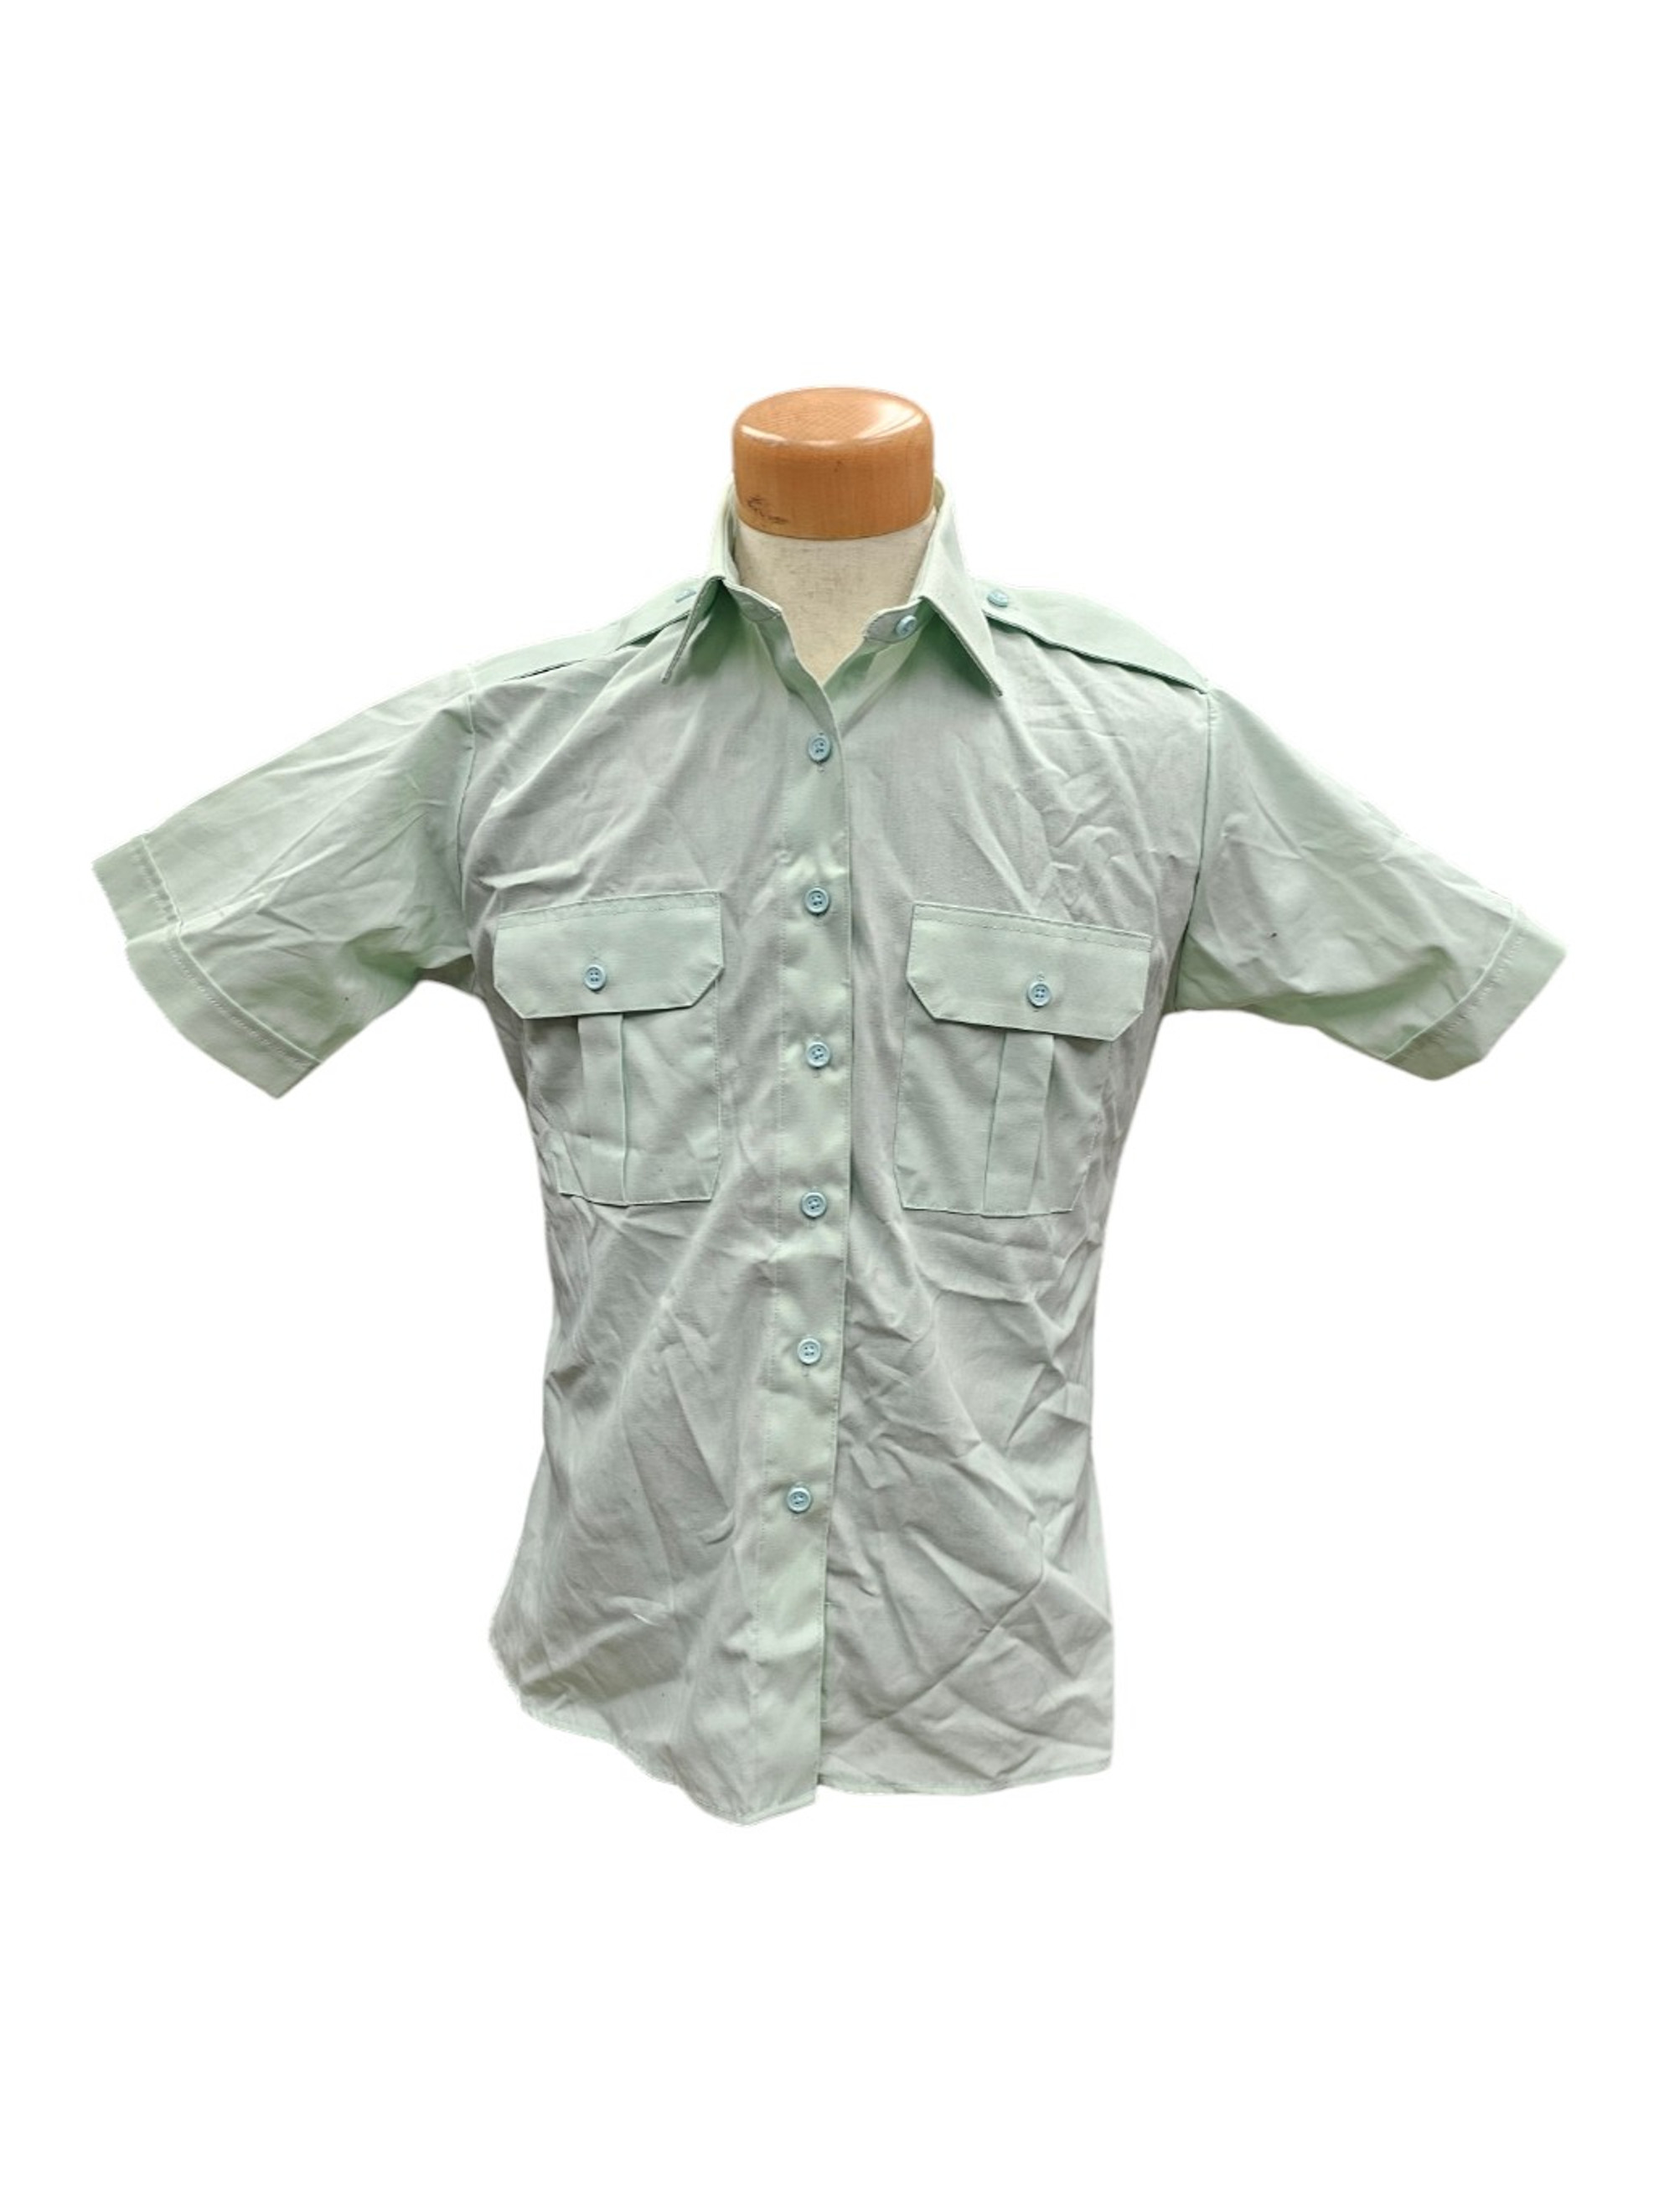 Canadian Armed Forces Men's Light Green Short Sleeve Dress Shirt